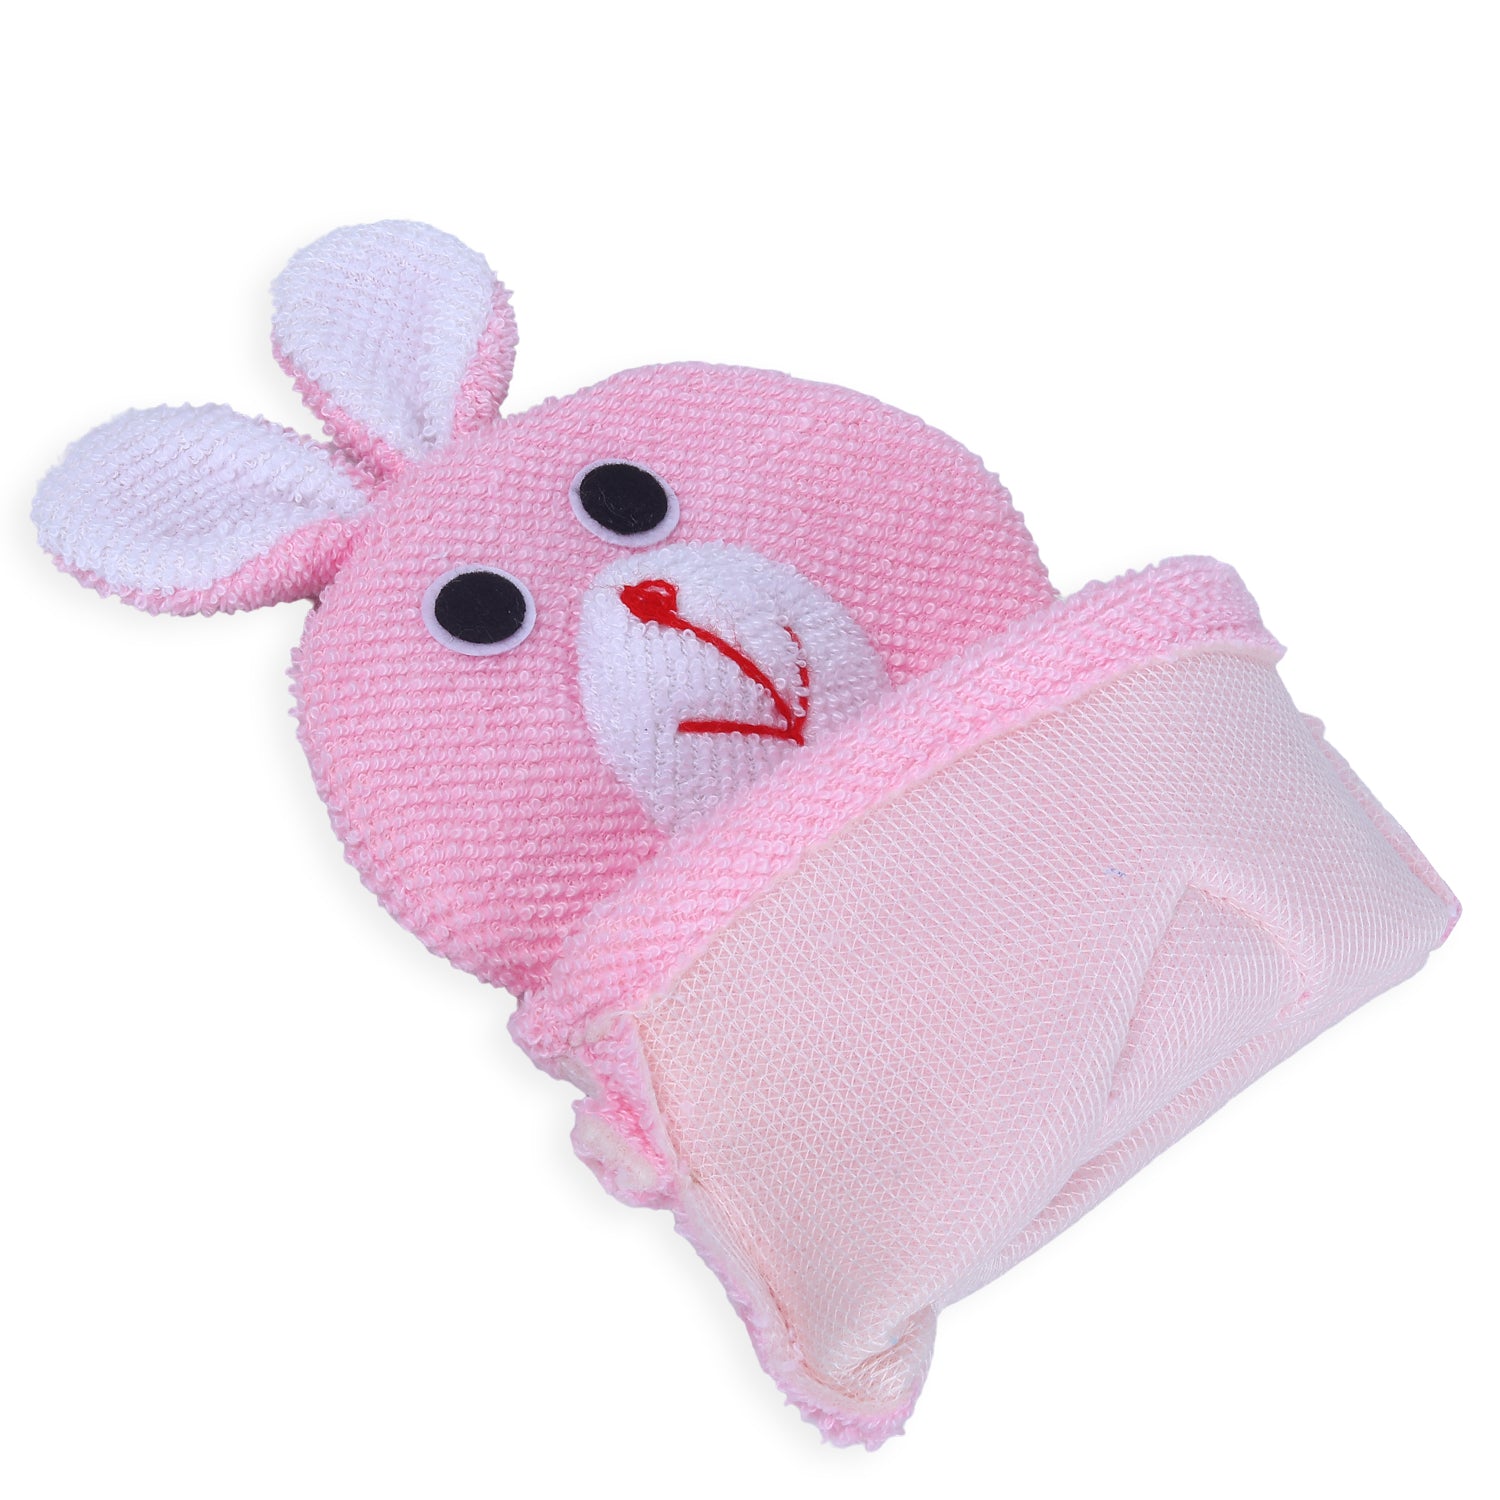 Baby Moo Naughty Rabbit Bath Time Fun Hand Puppet Loofah Bath Glove - Pink